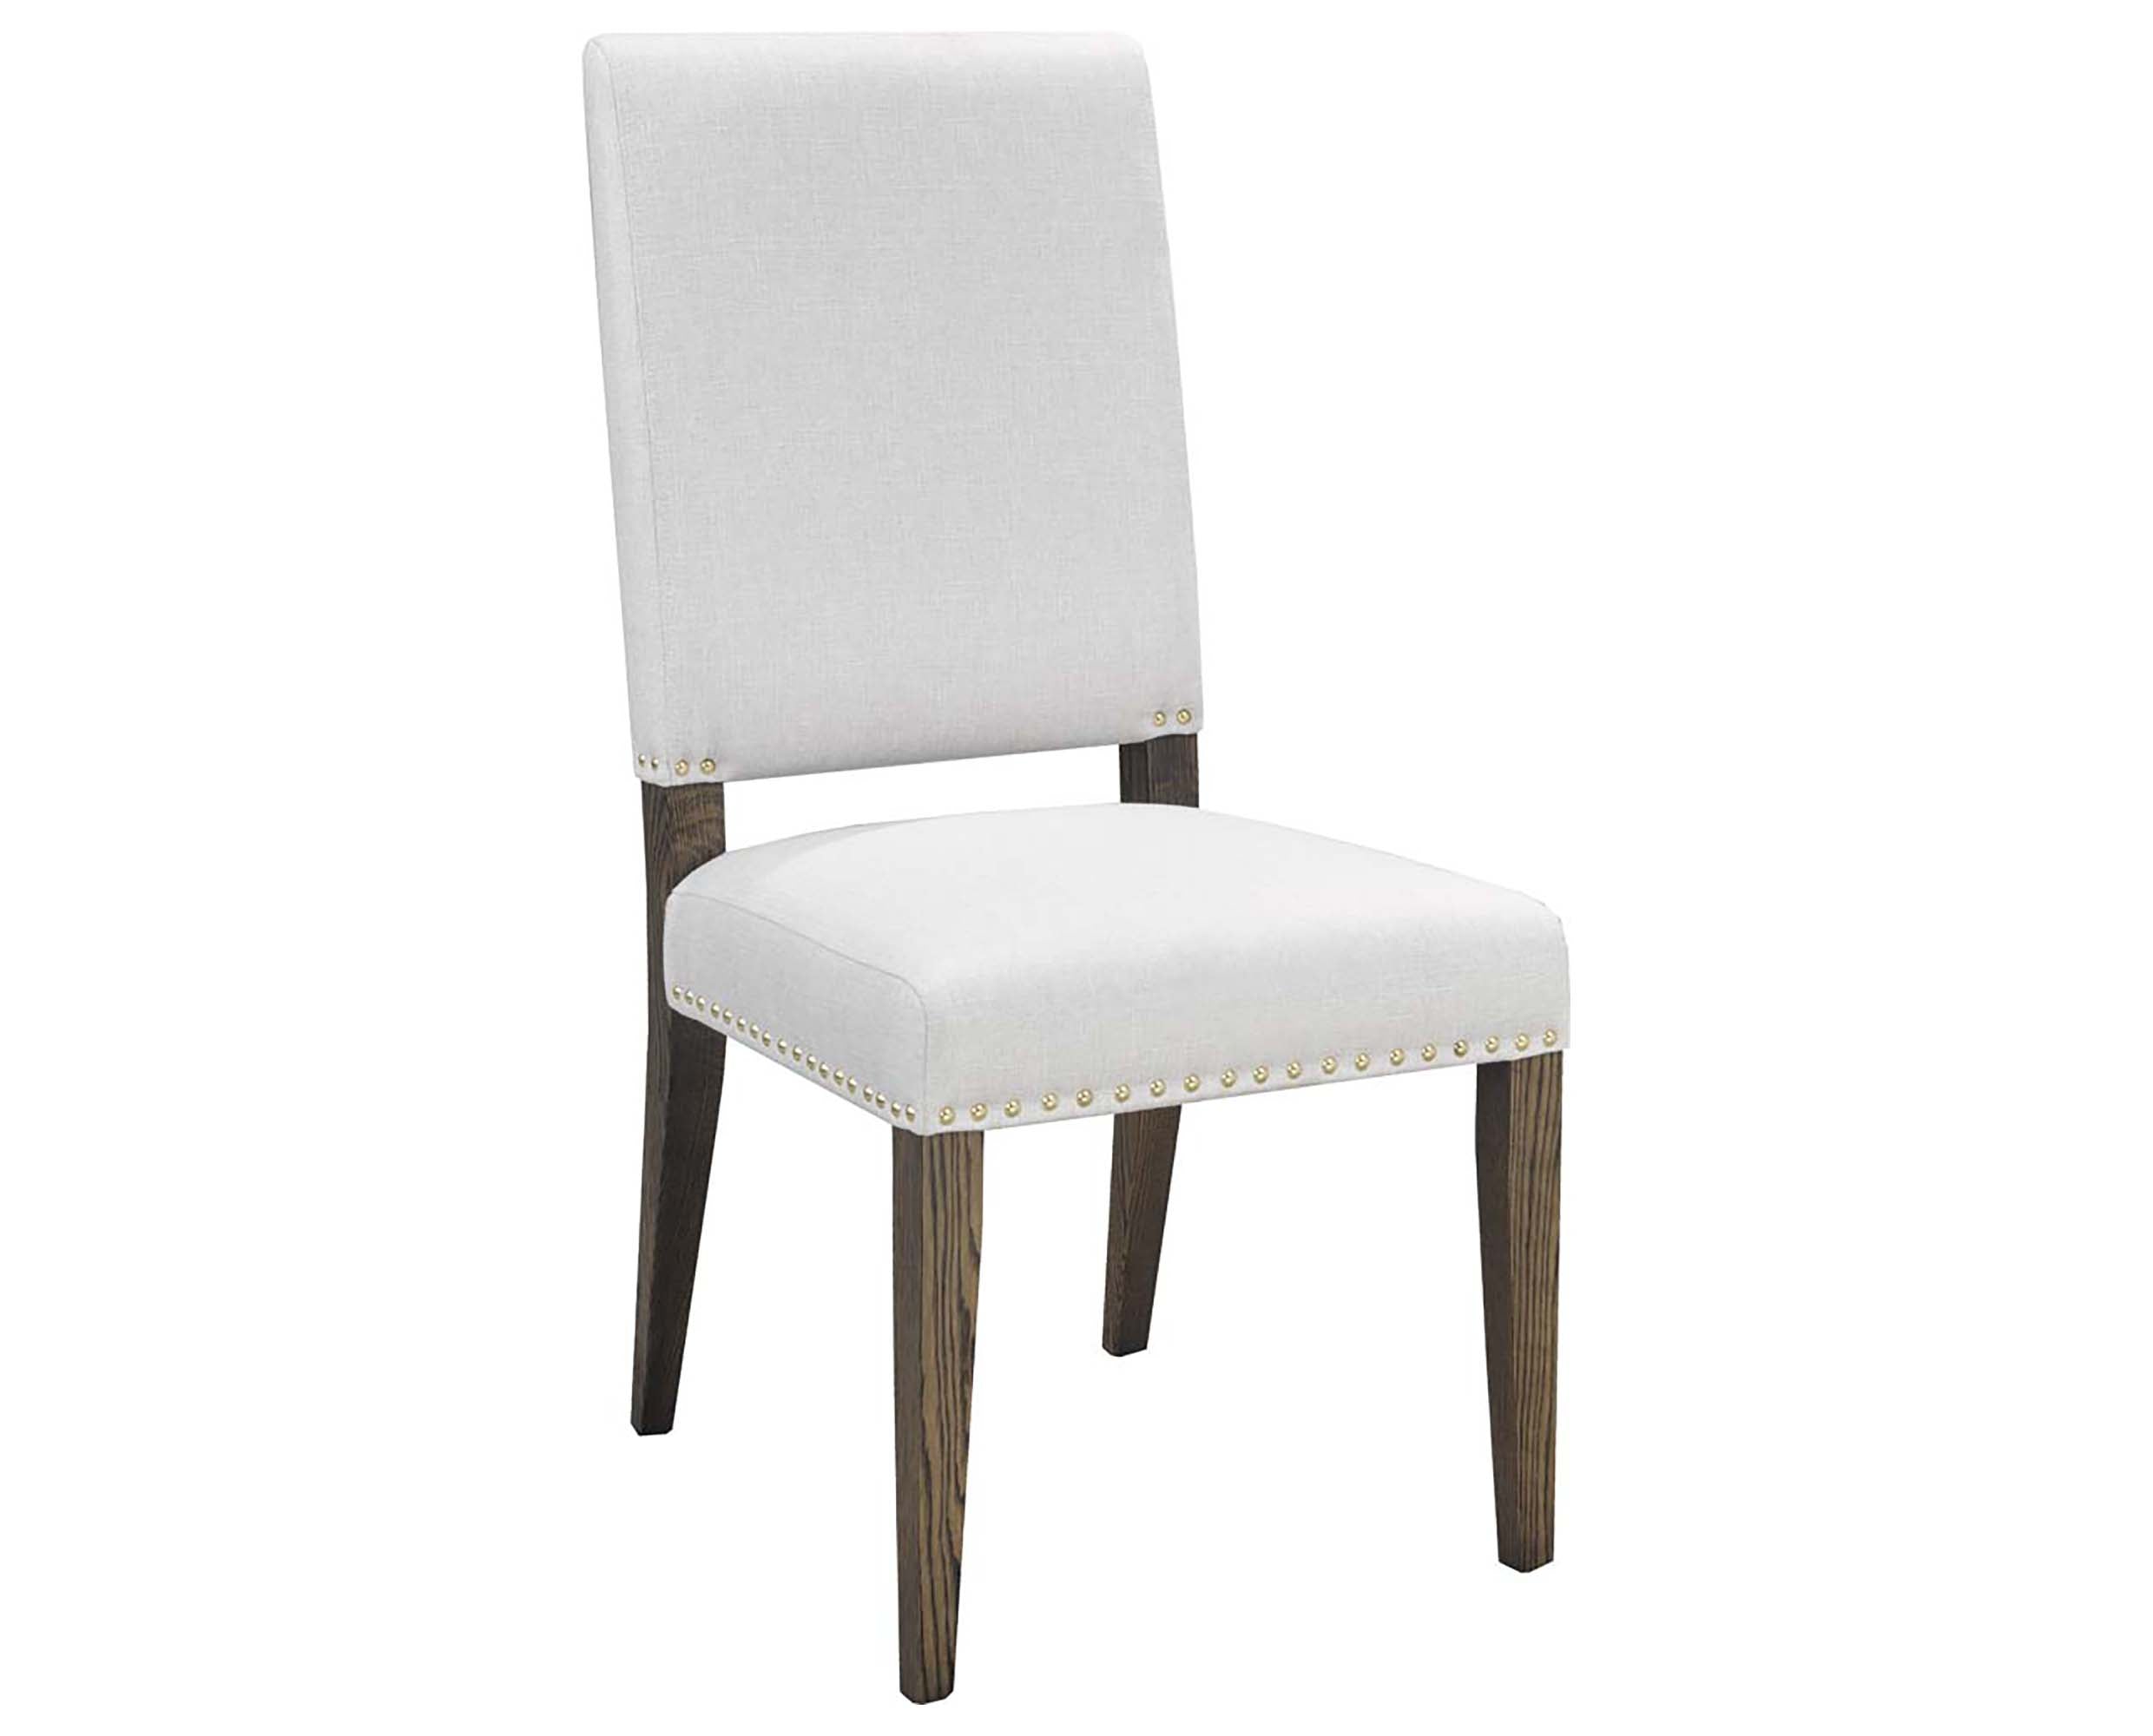 Chair as Shown | Cardinal Woodcraft Terra Dining Chair | Valley Ridge Furniture